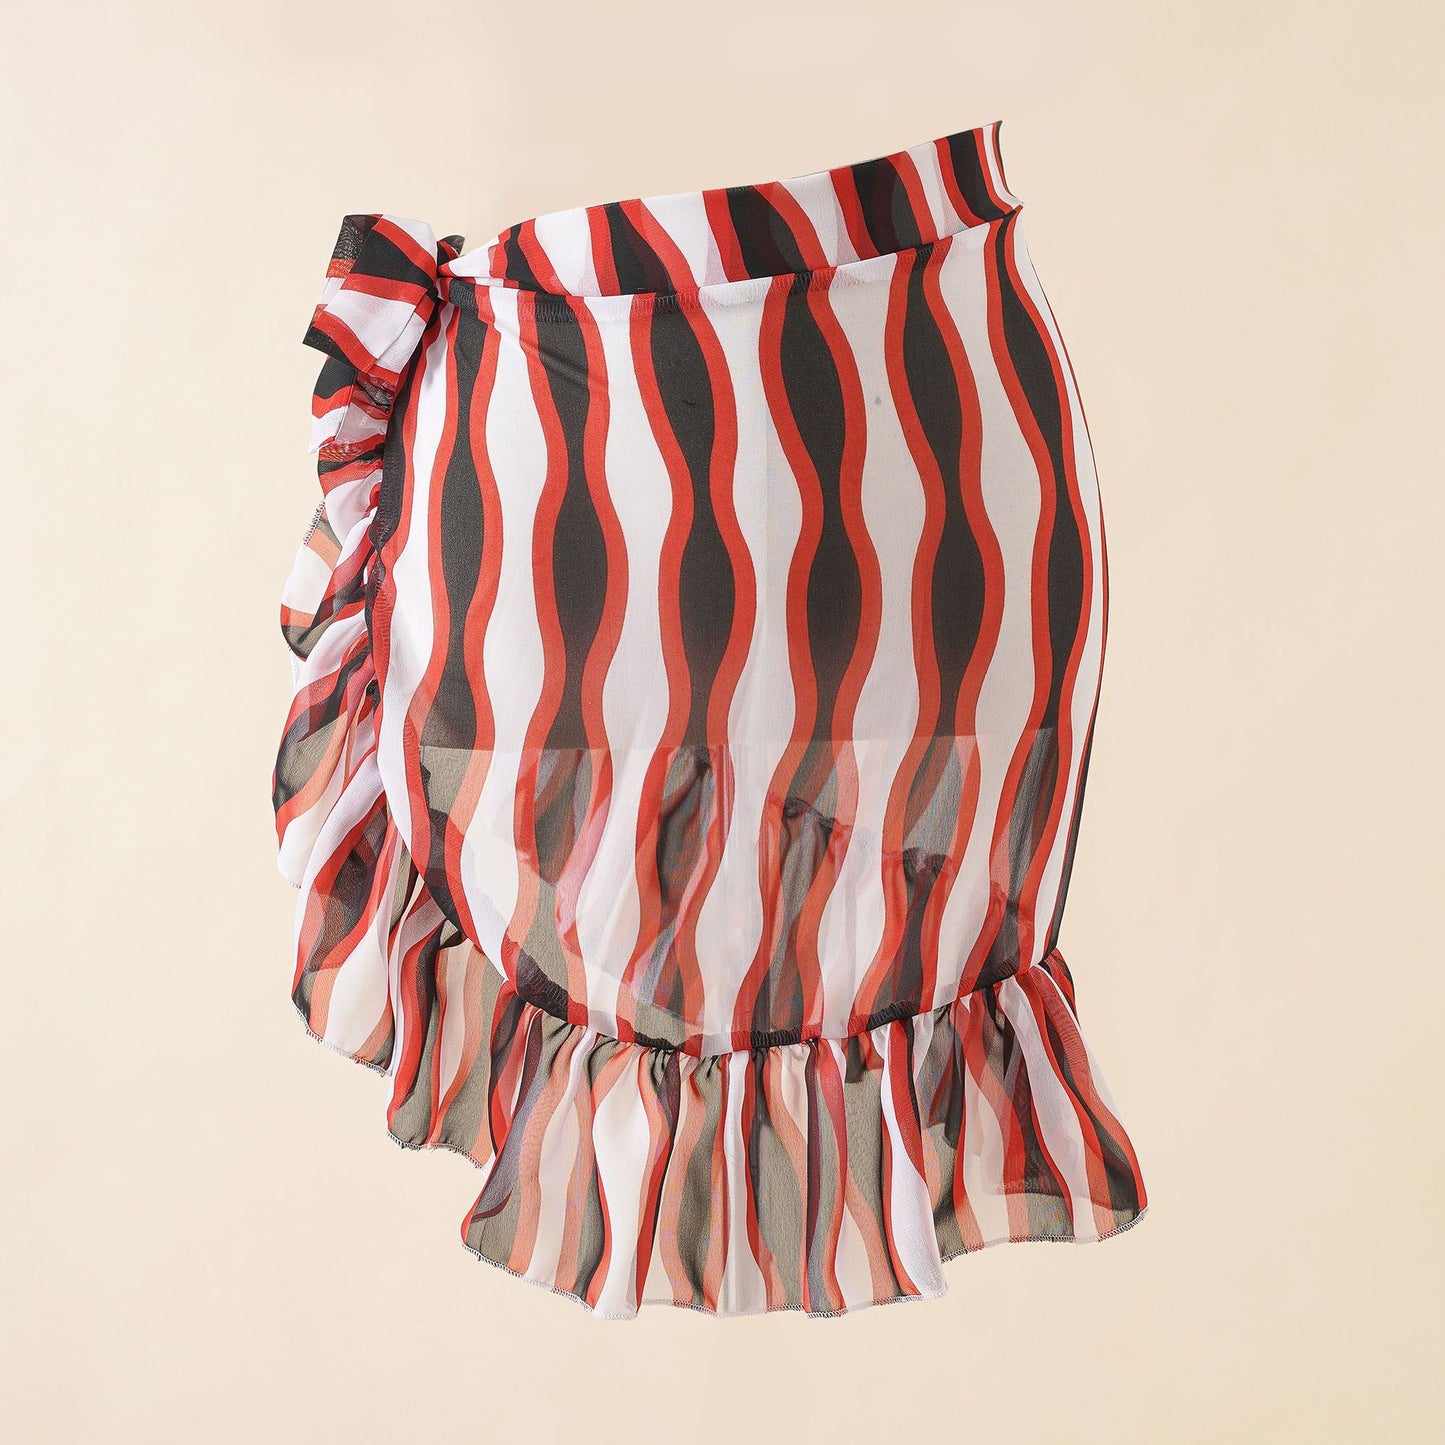 Bikini Sunscreen Chiffon Beach Skirt Leaf Printed Swimsuit Fishtail Skirt